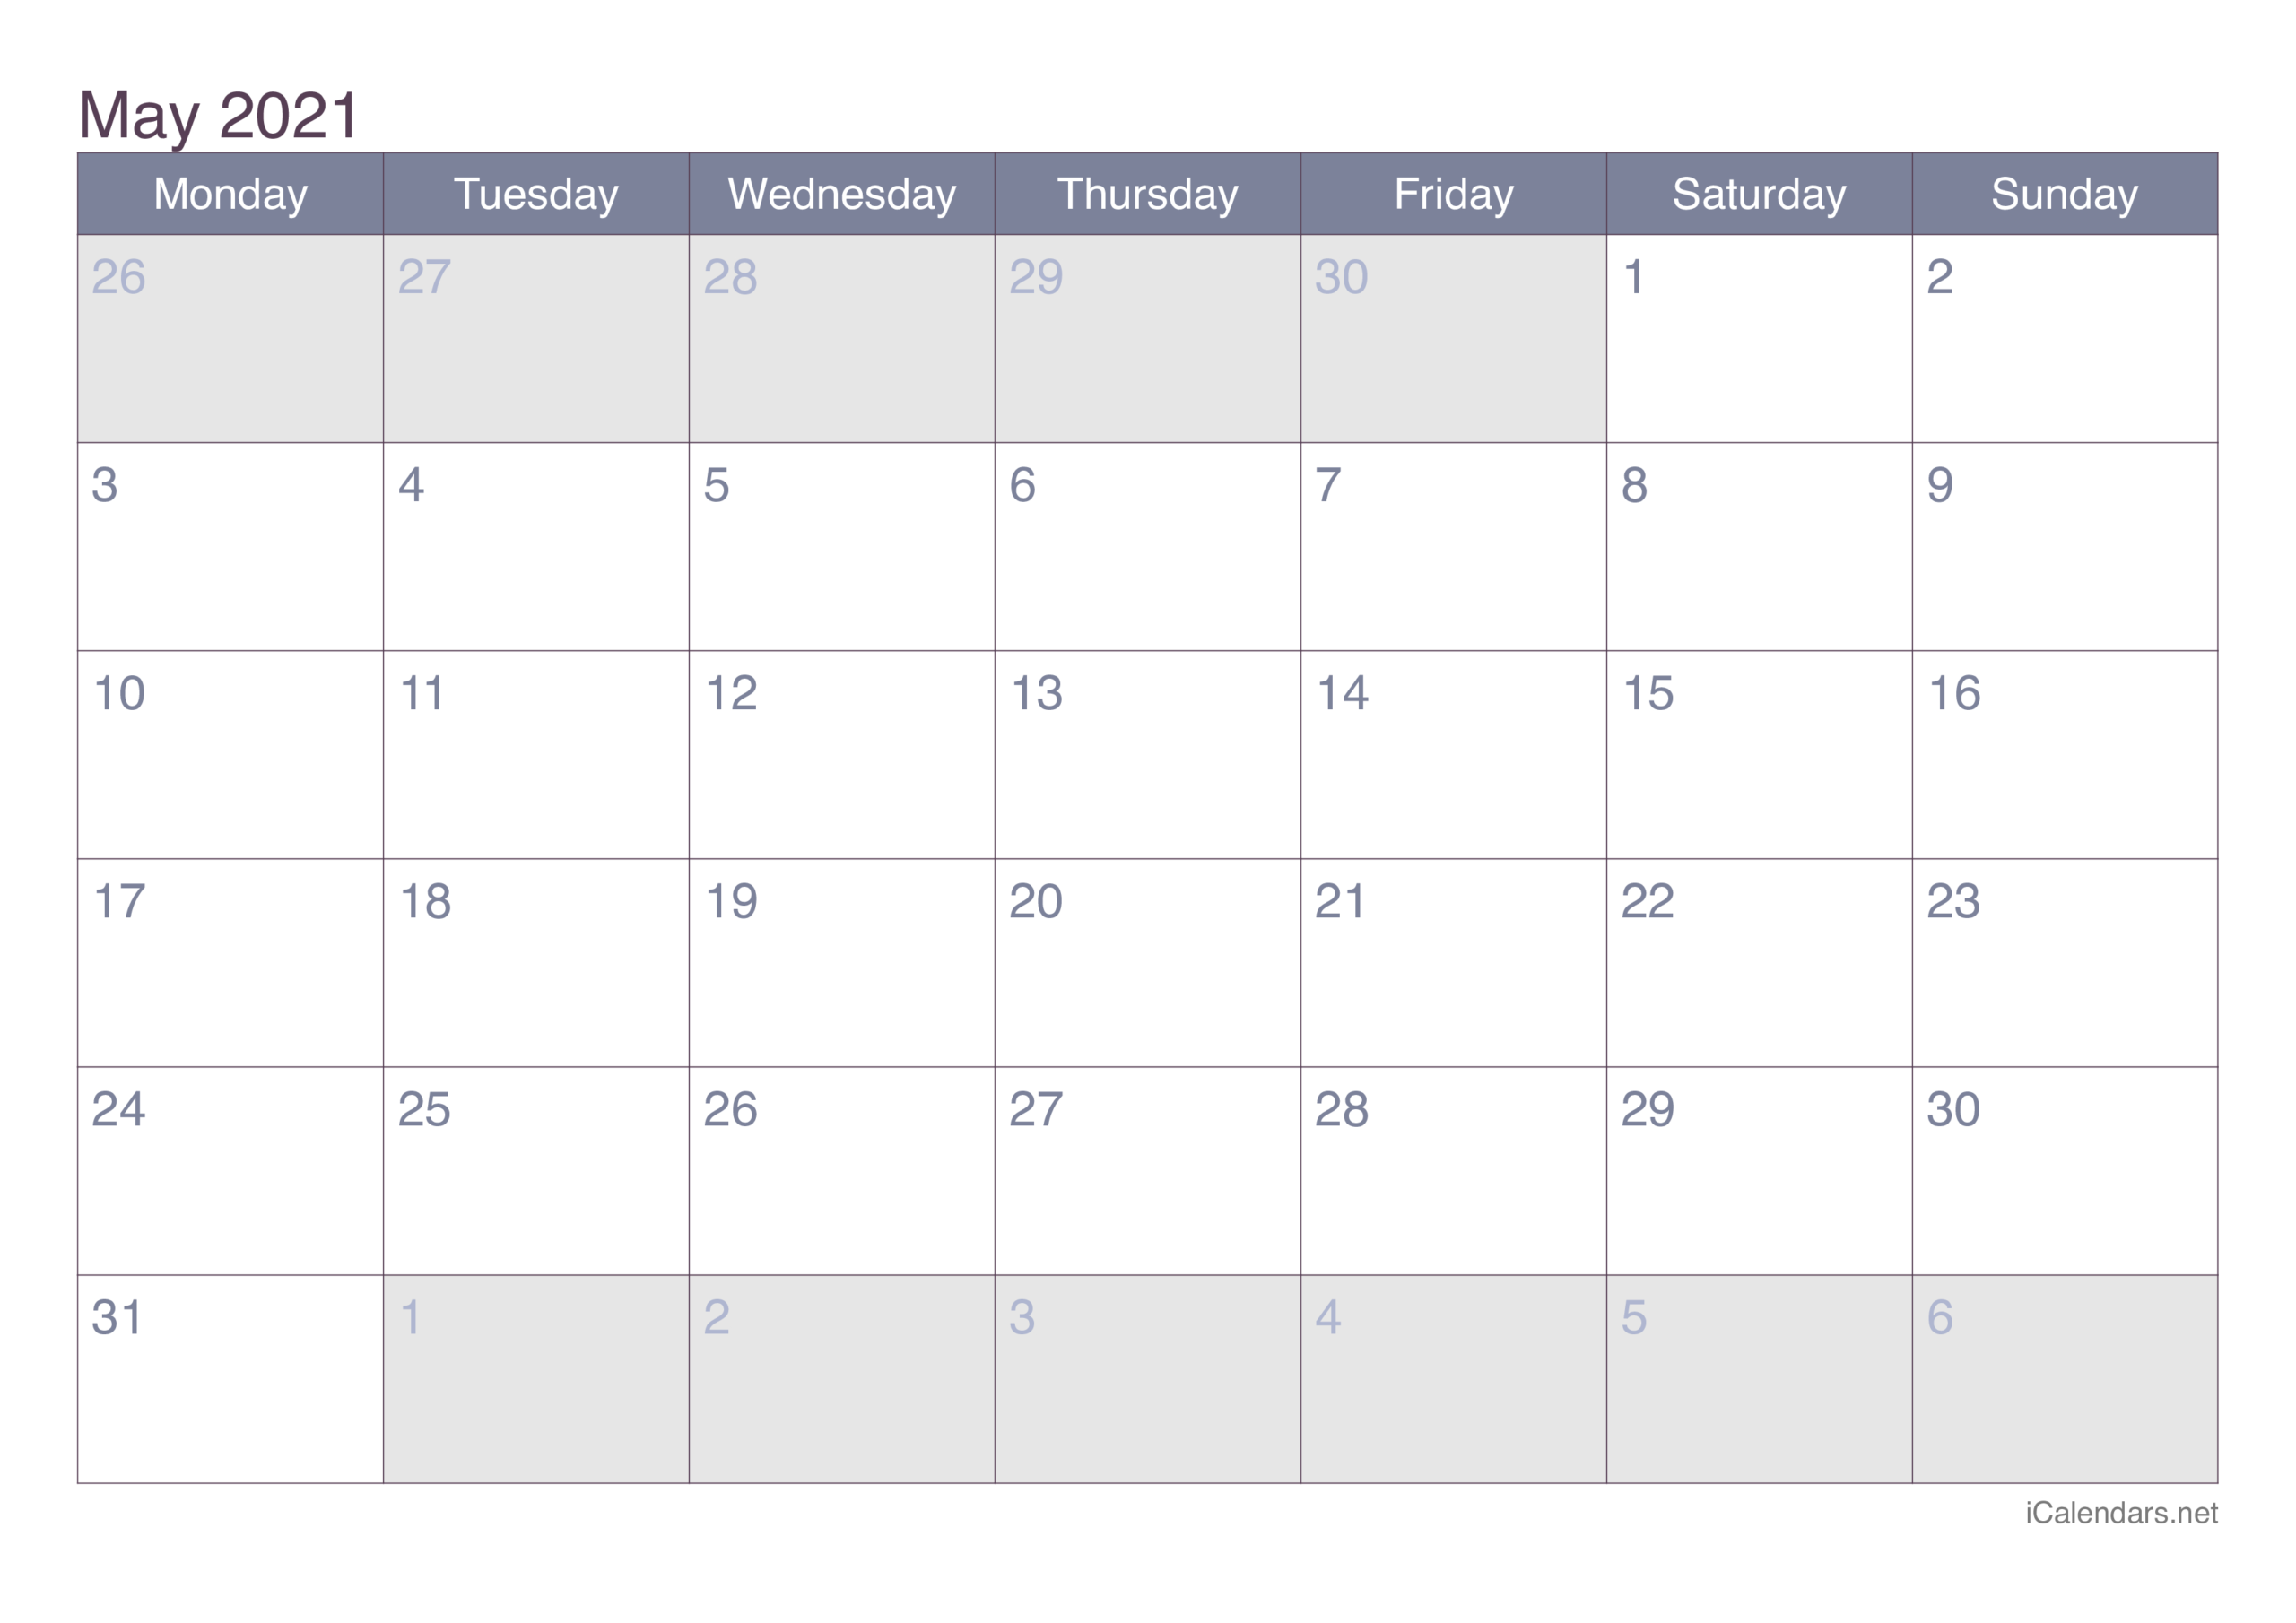 May 2021 Printable Calendar - Icalendars-May 2021 Excel Vacation